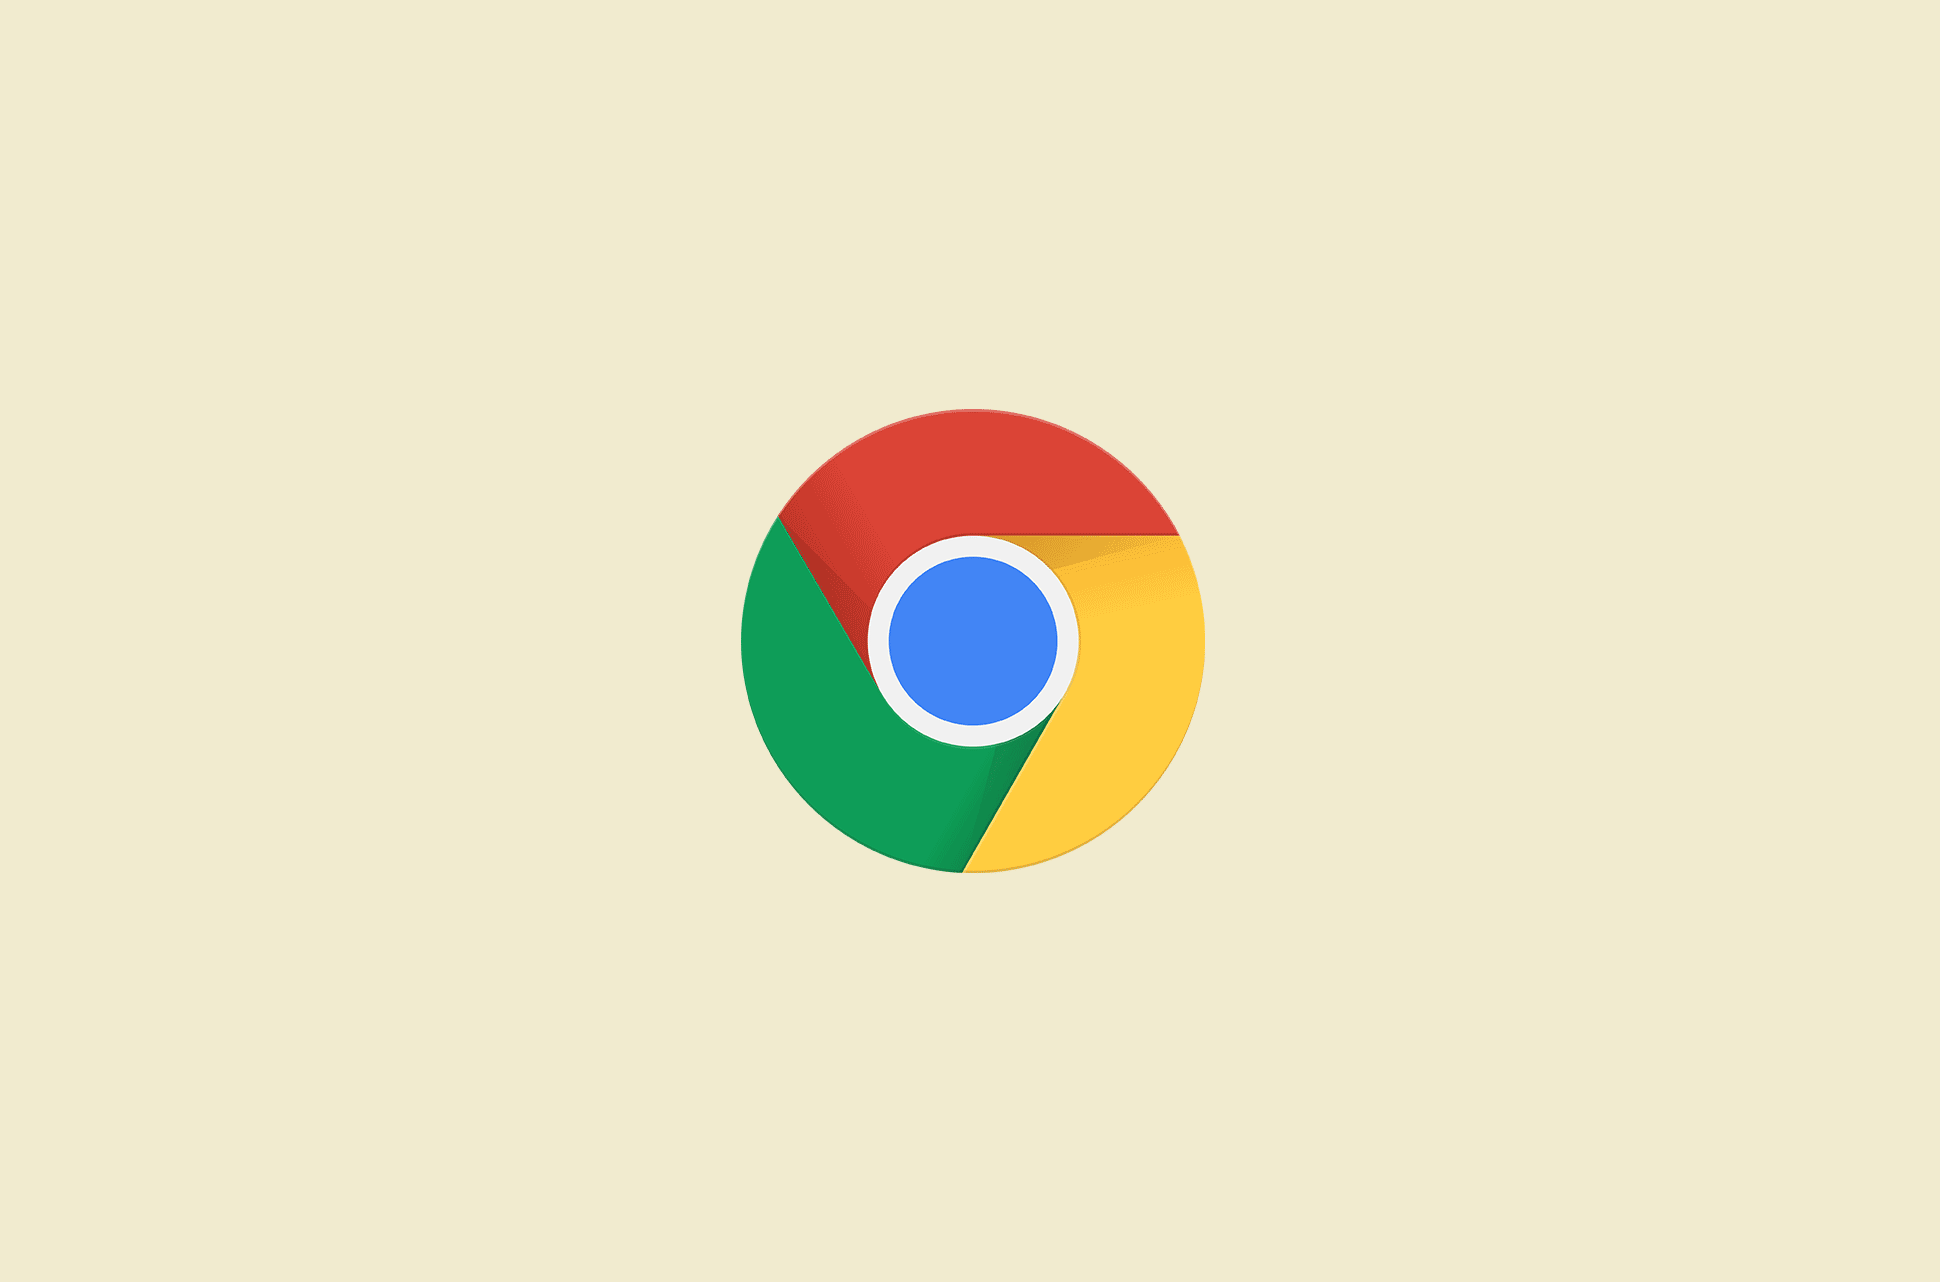 Logo du navigateur Chrome